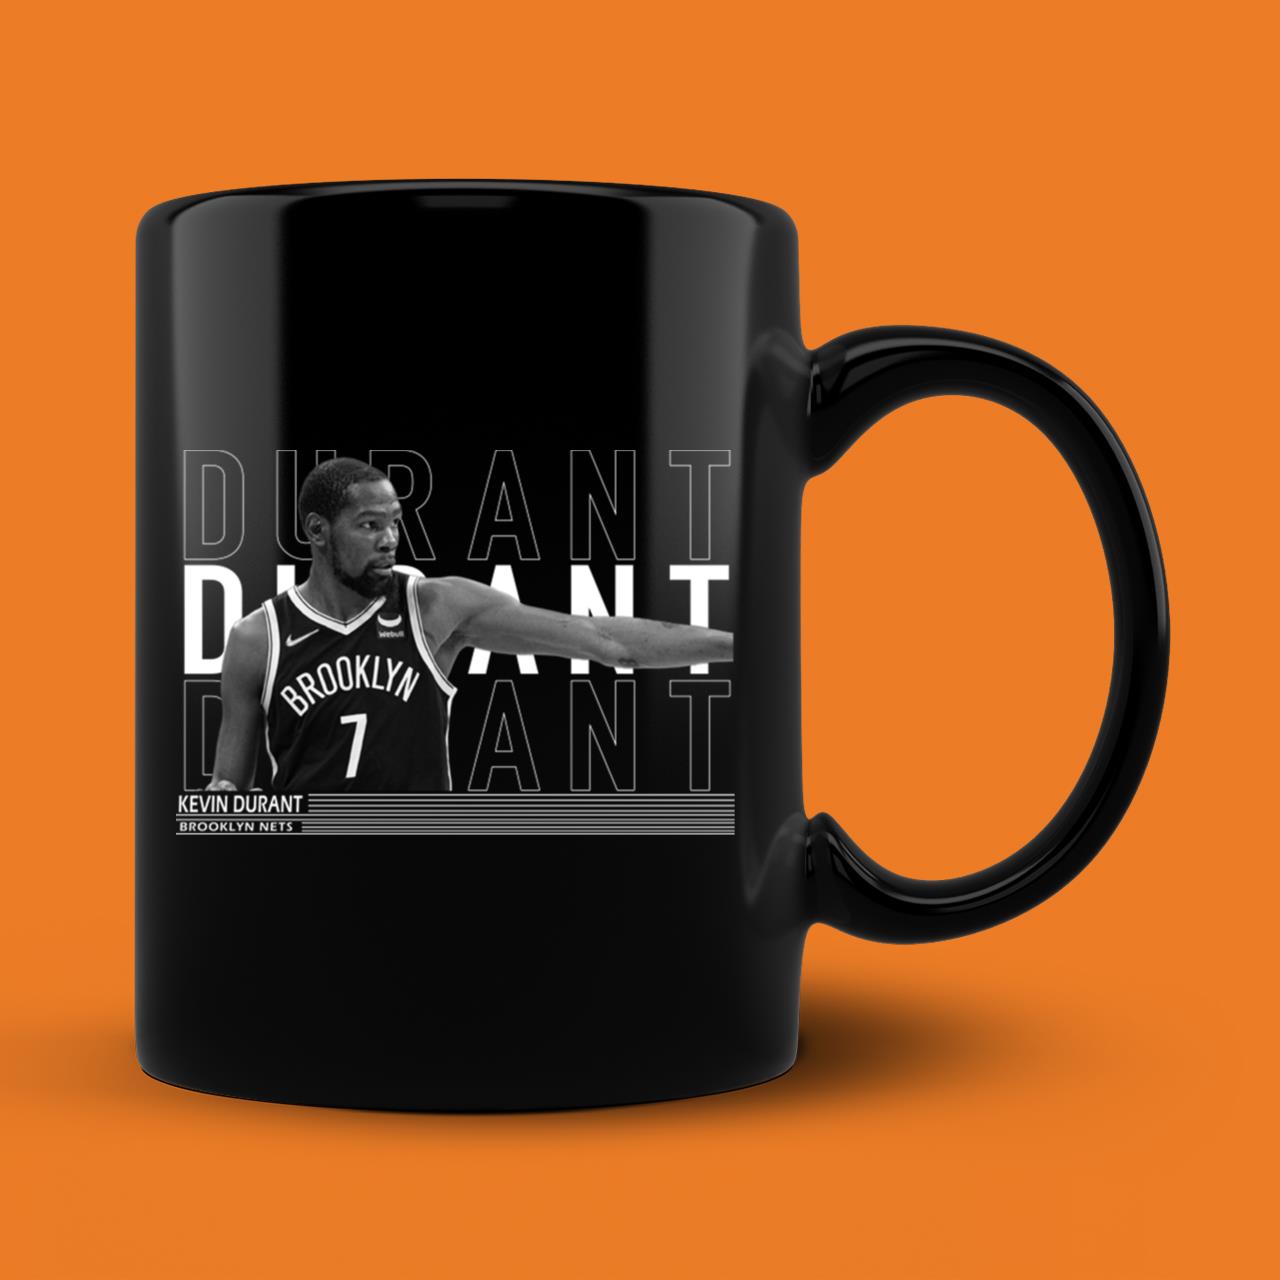 Kevin Durant Typography Mug